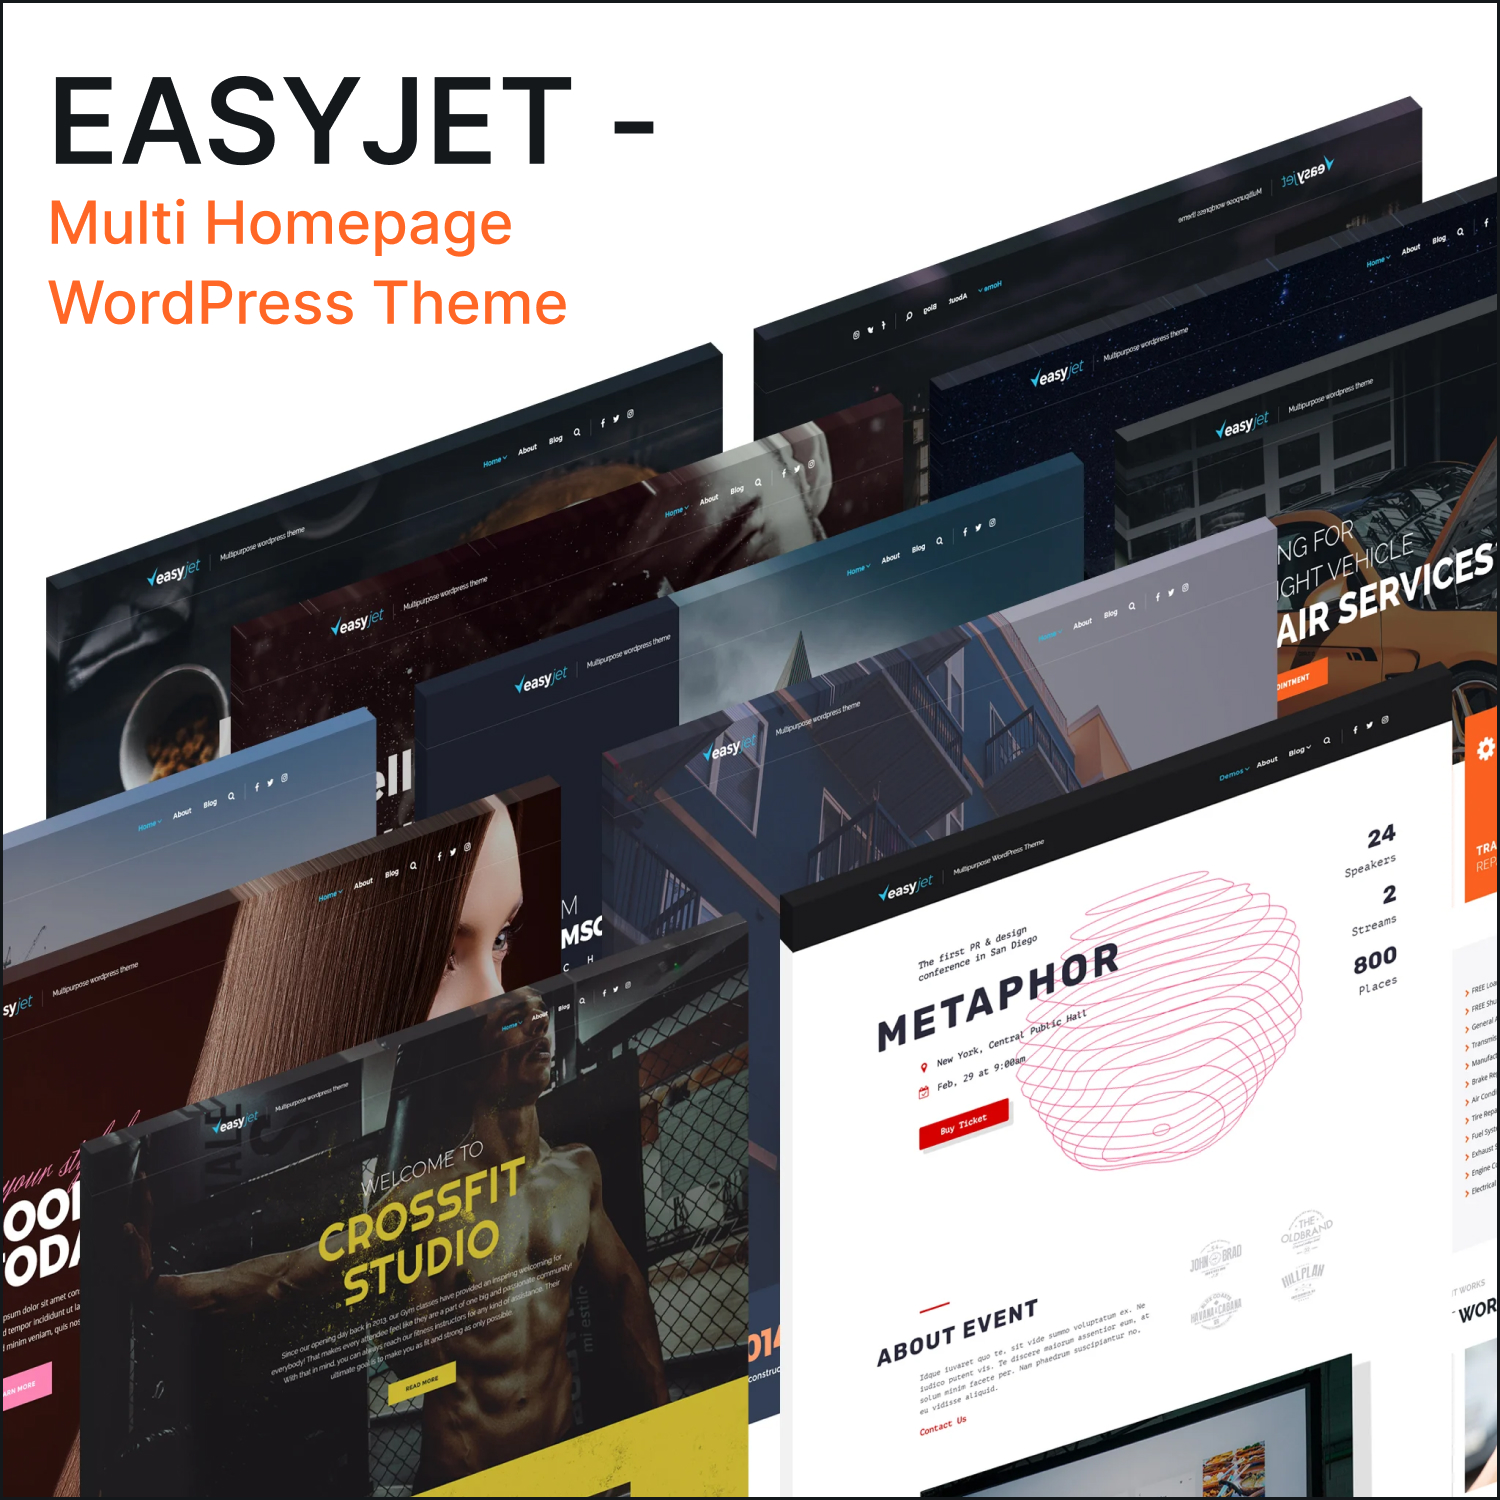 Preview easyjet multi homepage wordpress theme.